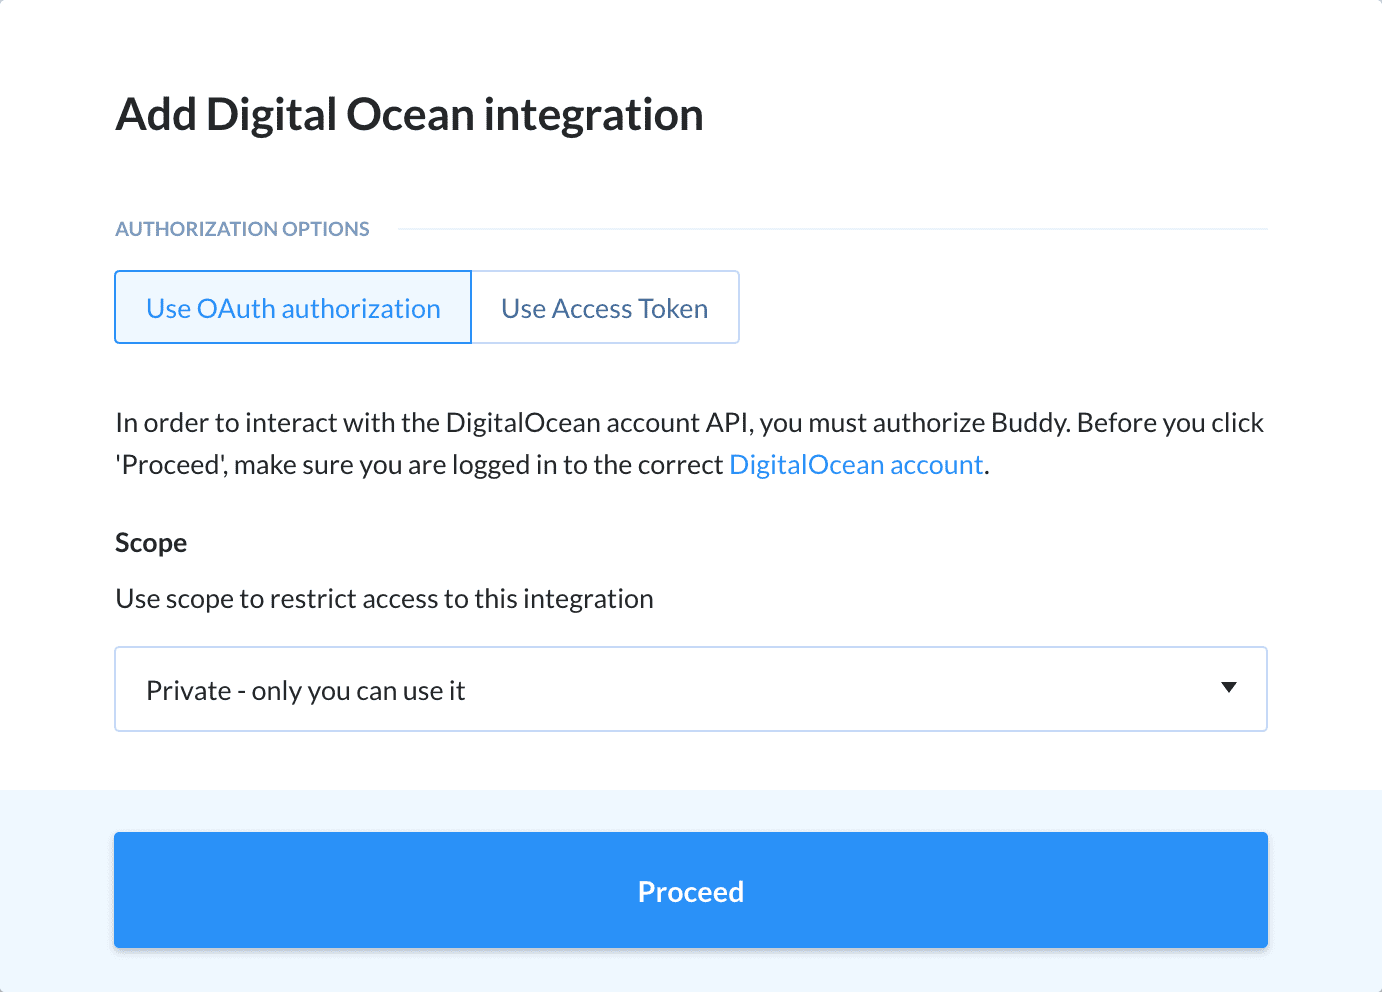 Adding DigitalOcean integration